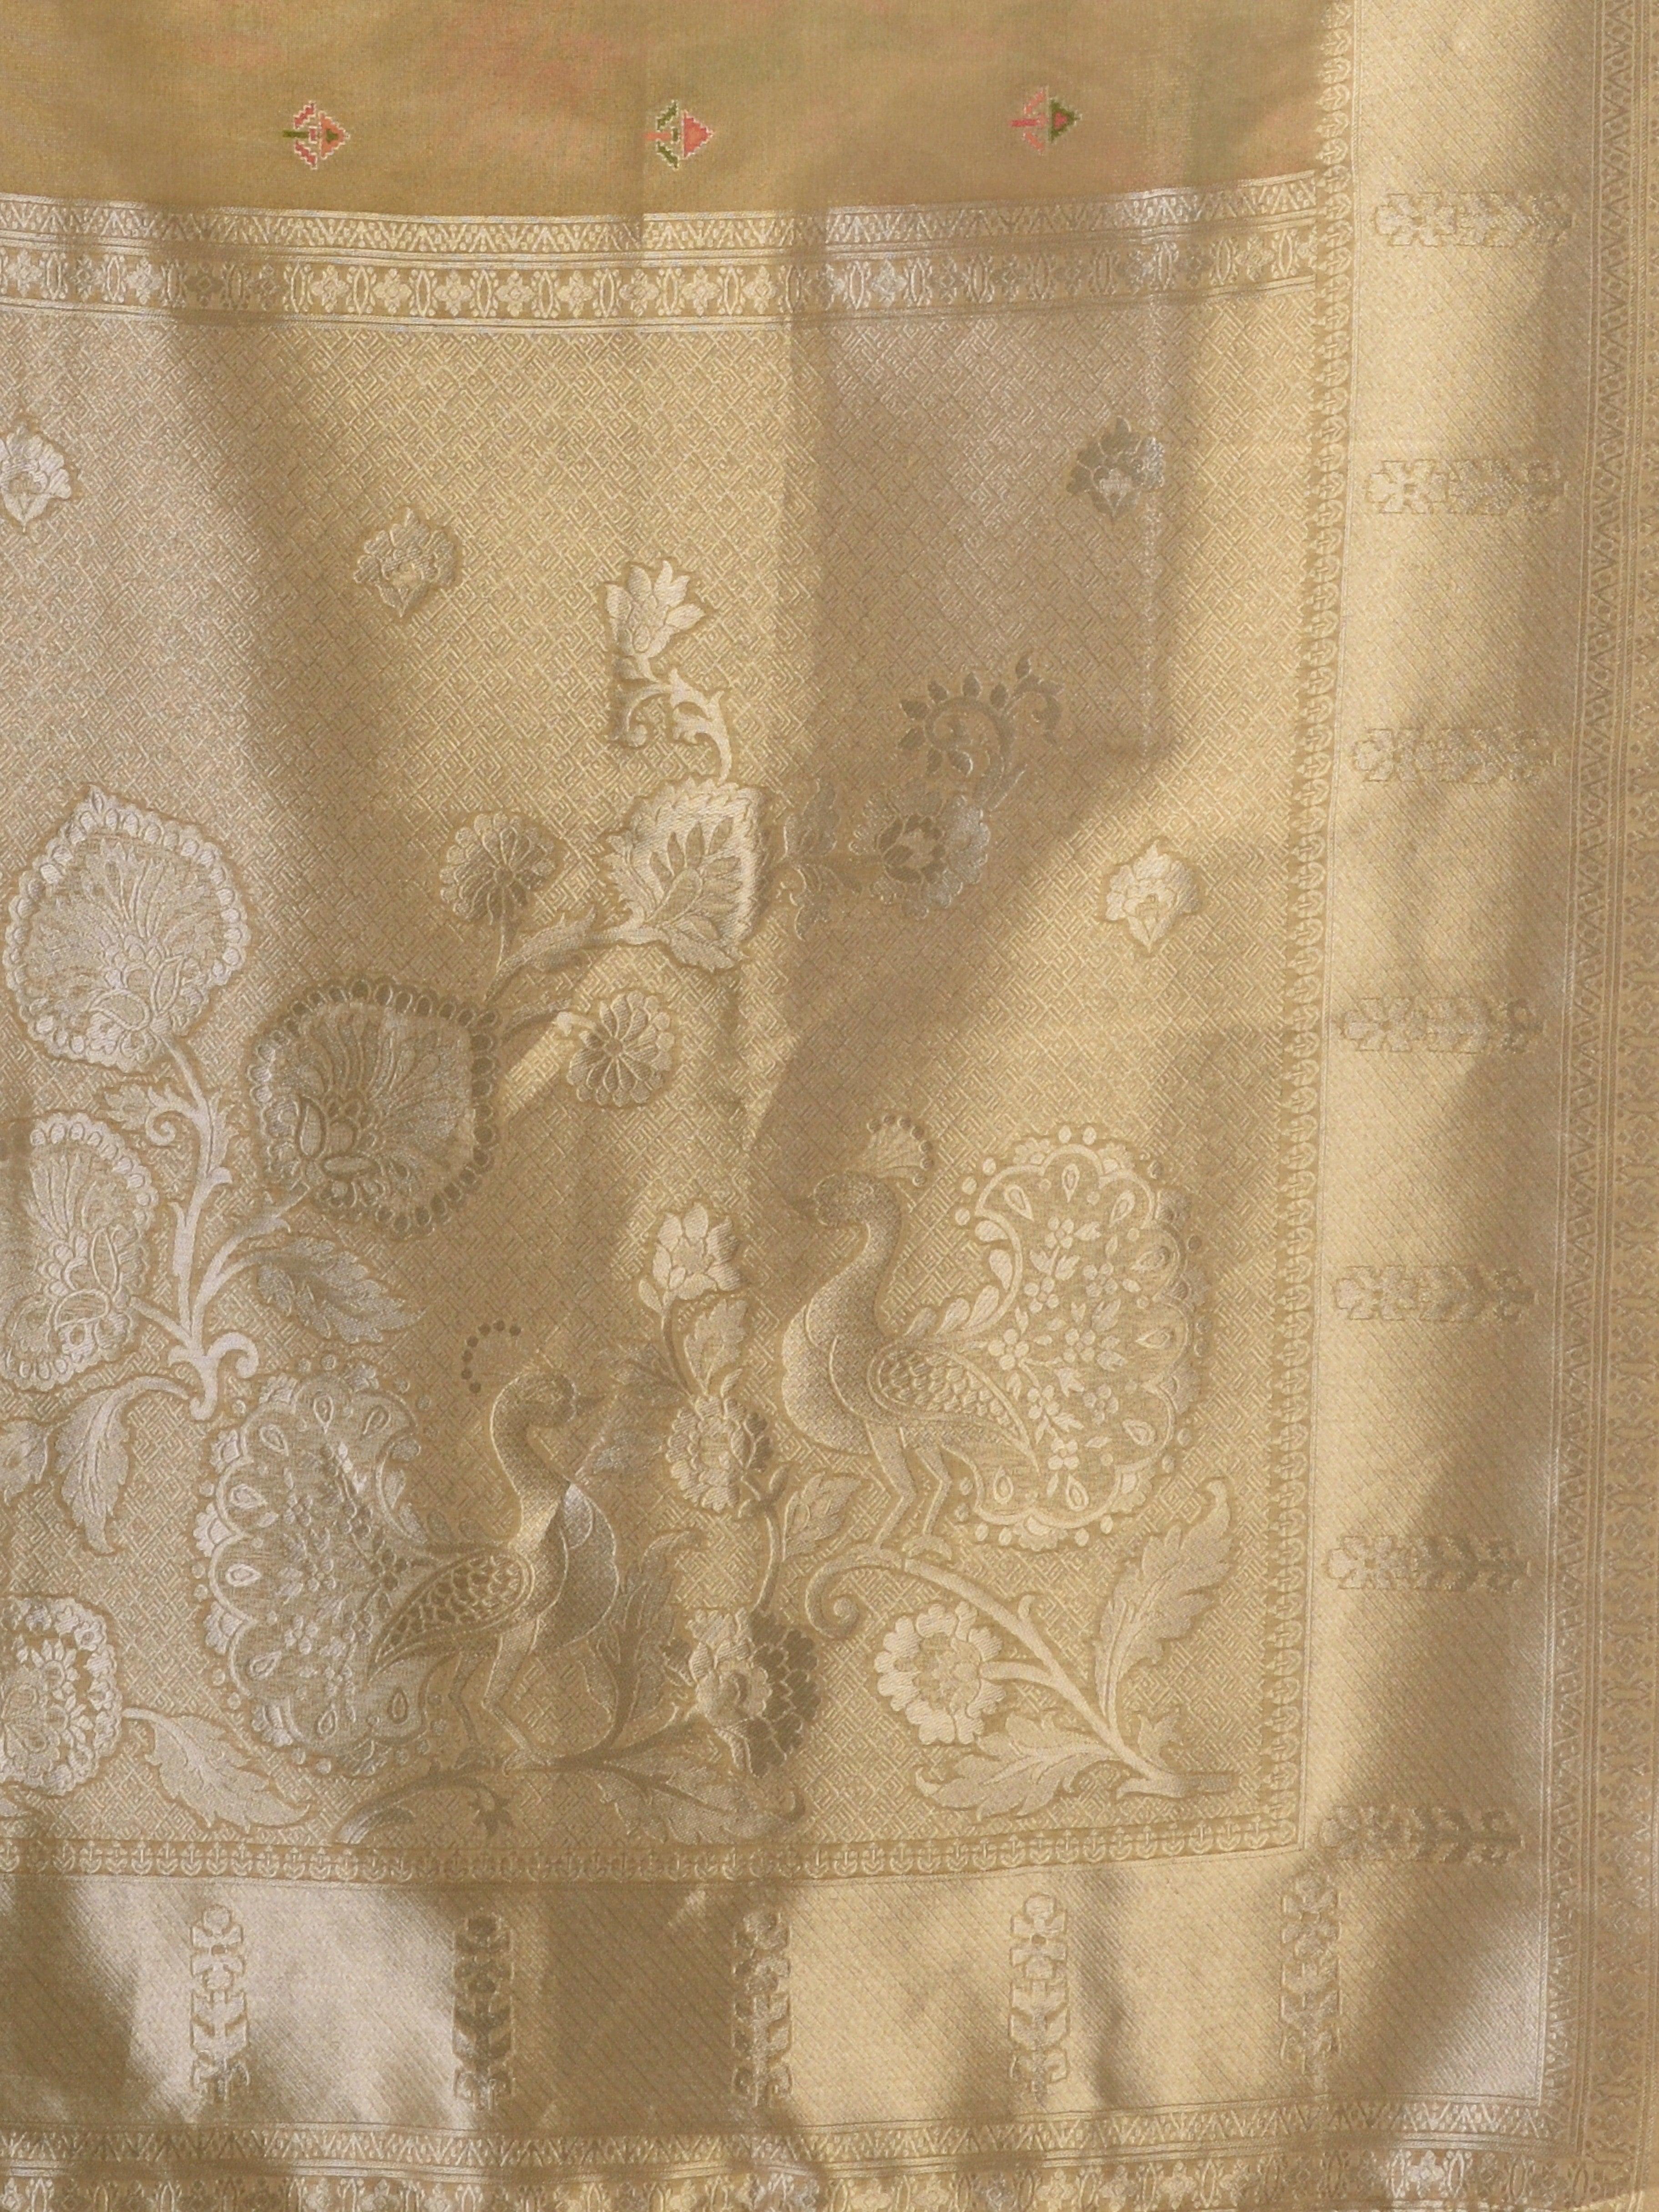 Kavvya Metallic Gold Soft & Lightweight Tissue Silk Weaving Saree - KAVVYA 